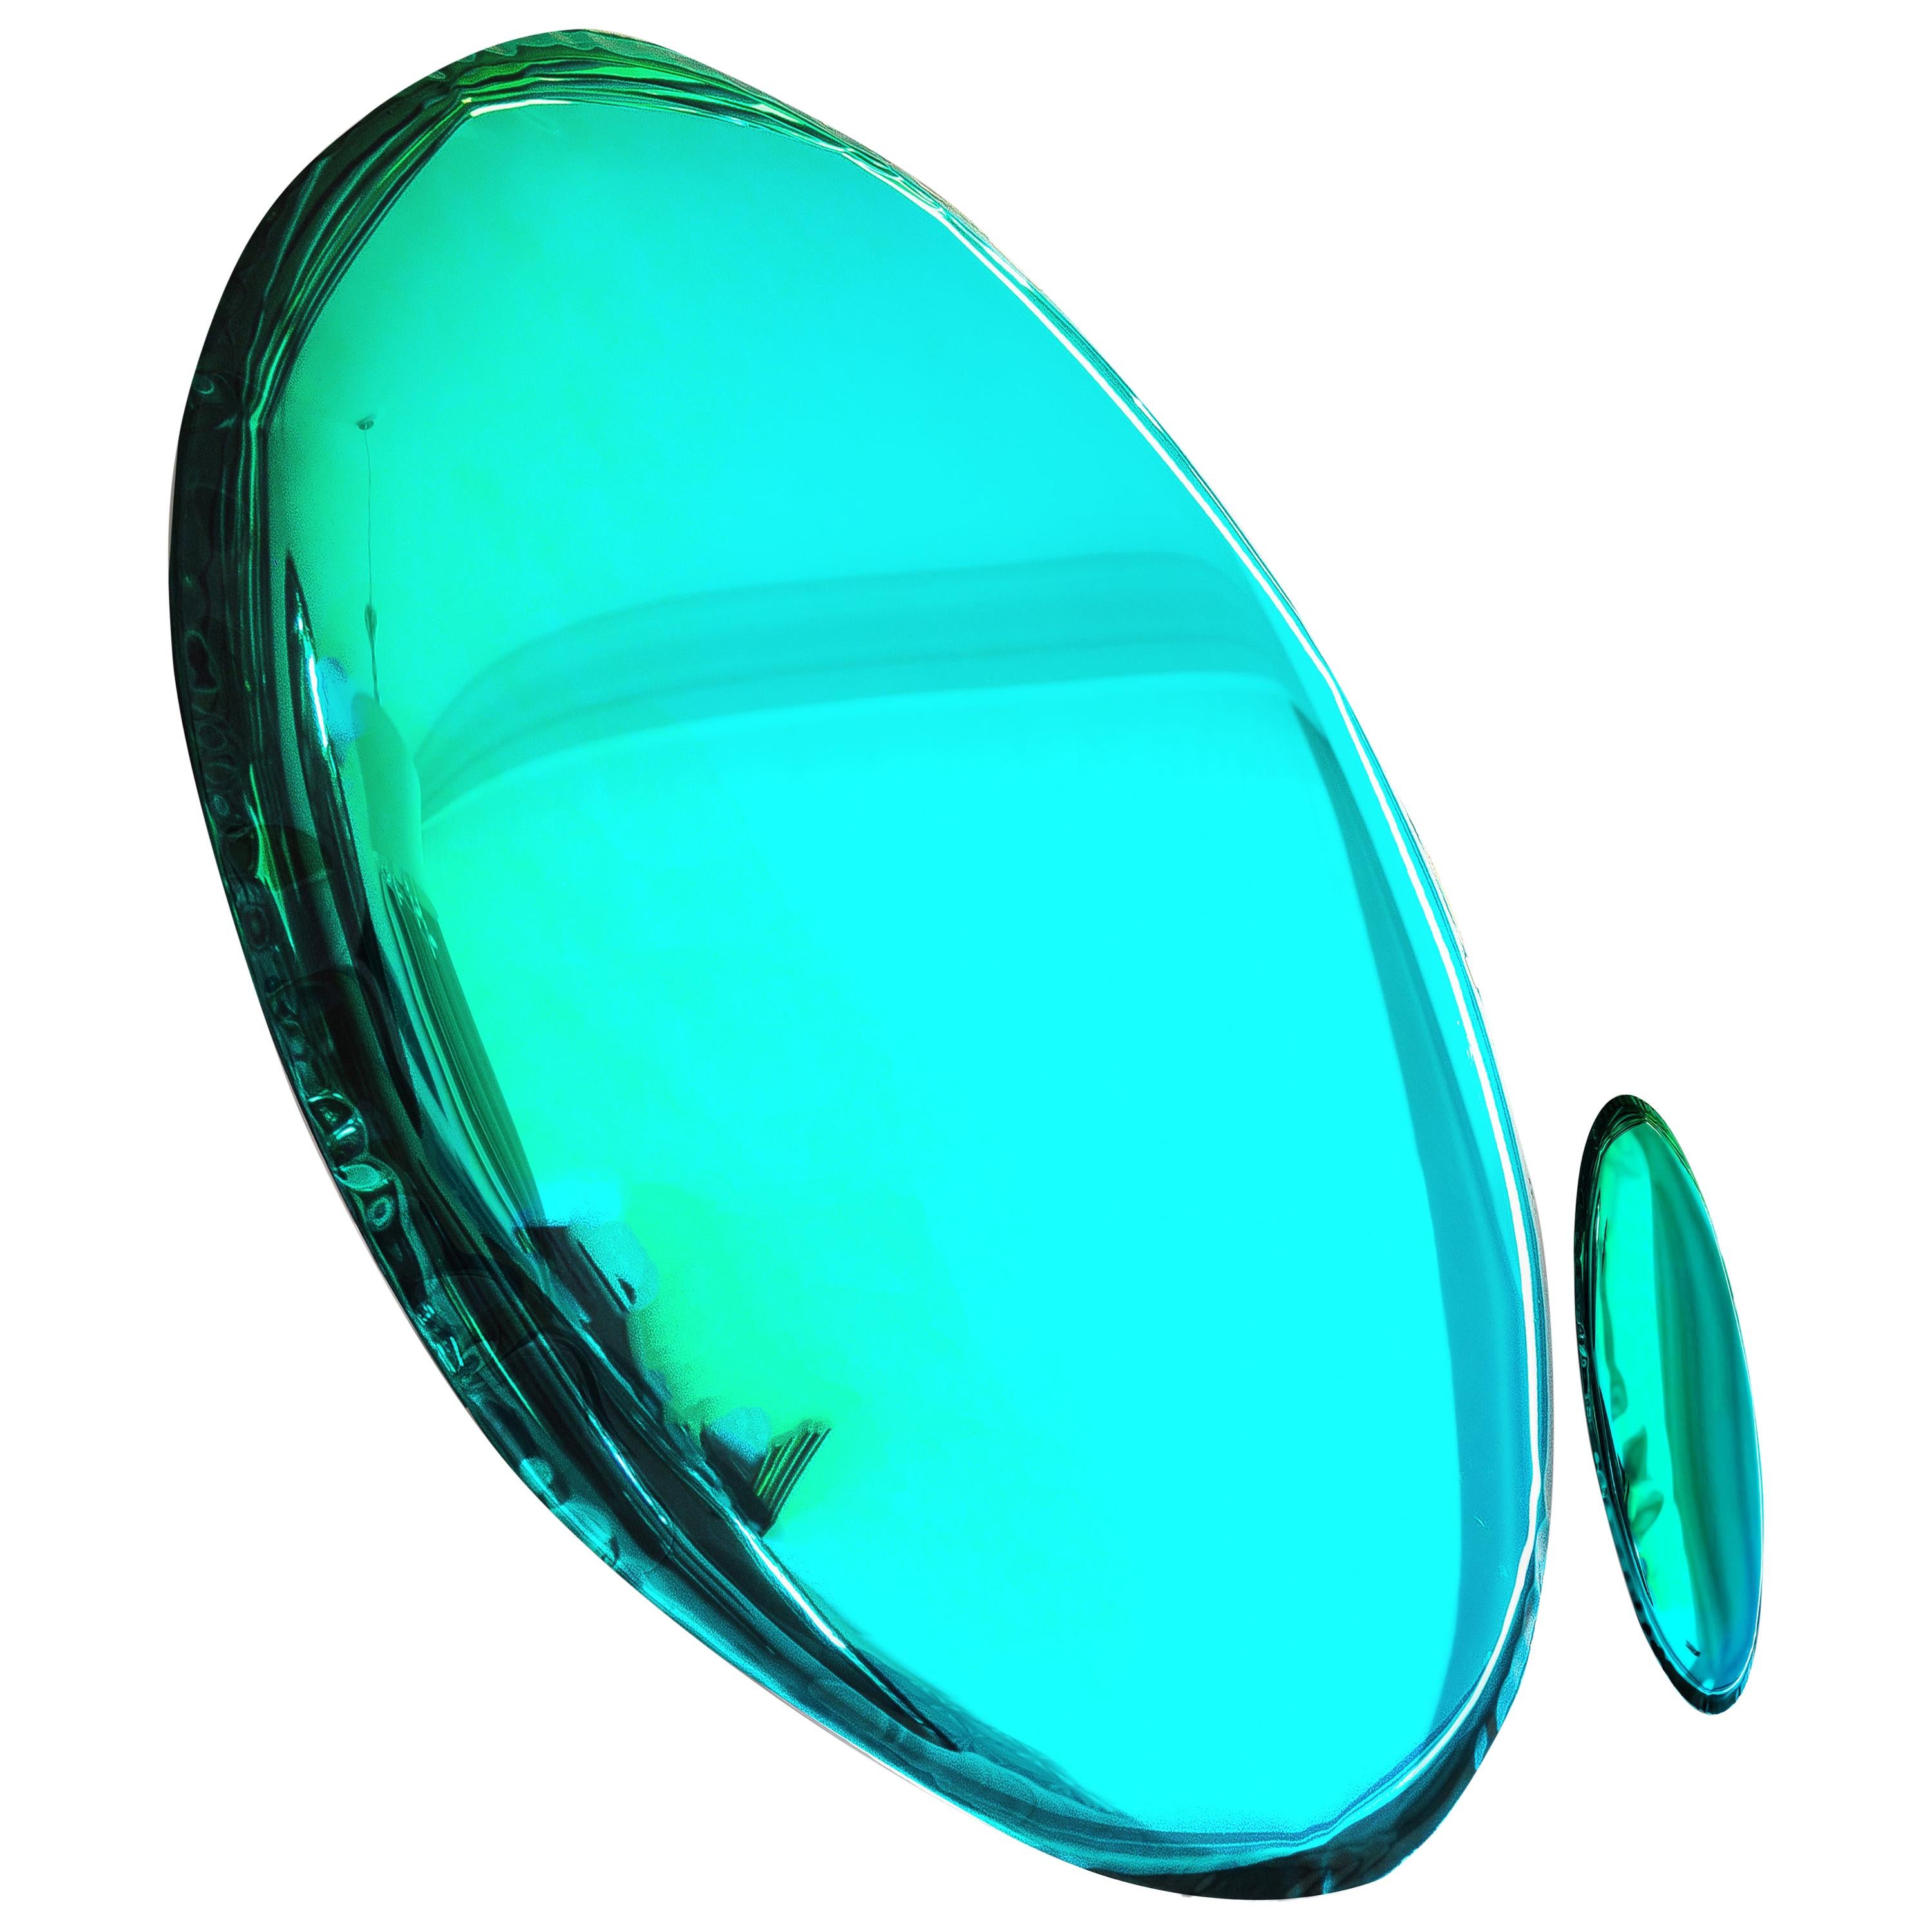 Tafla O1 Mirror in Polished Stainless Steel by Zieta in Emerald Green